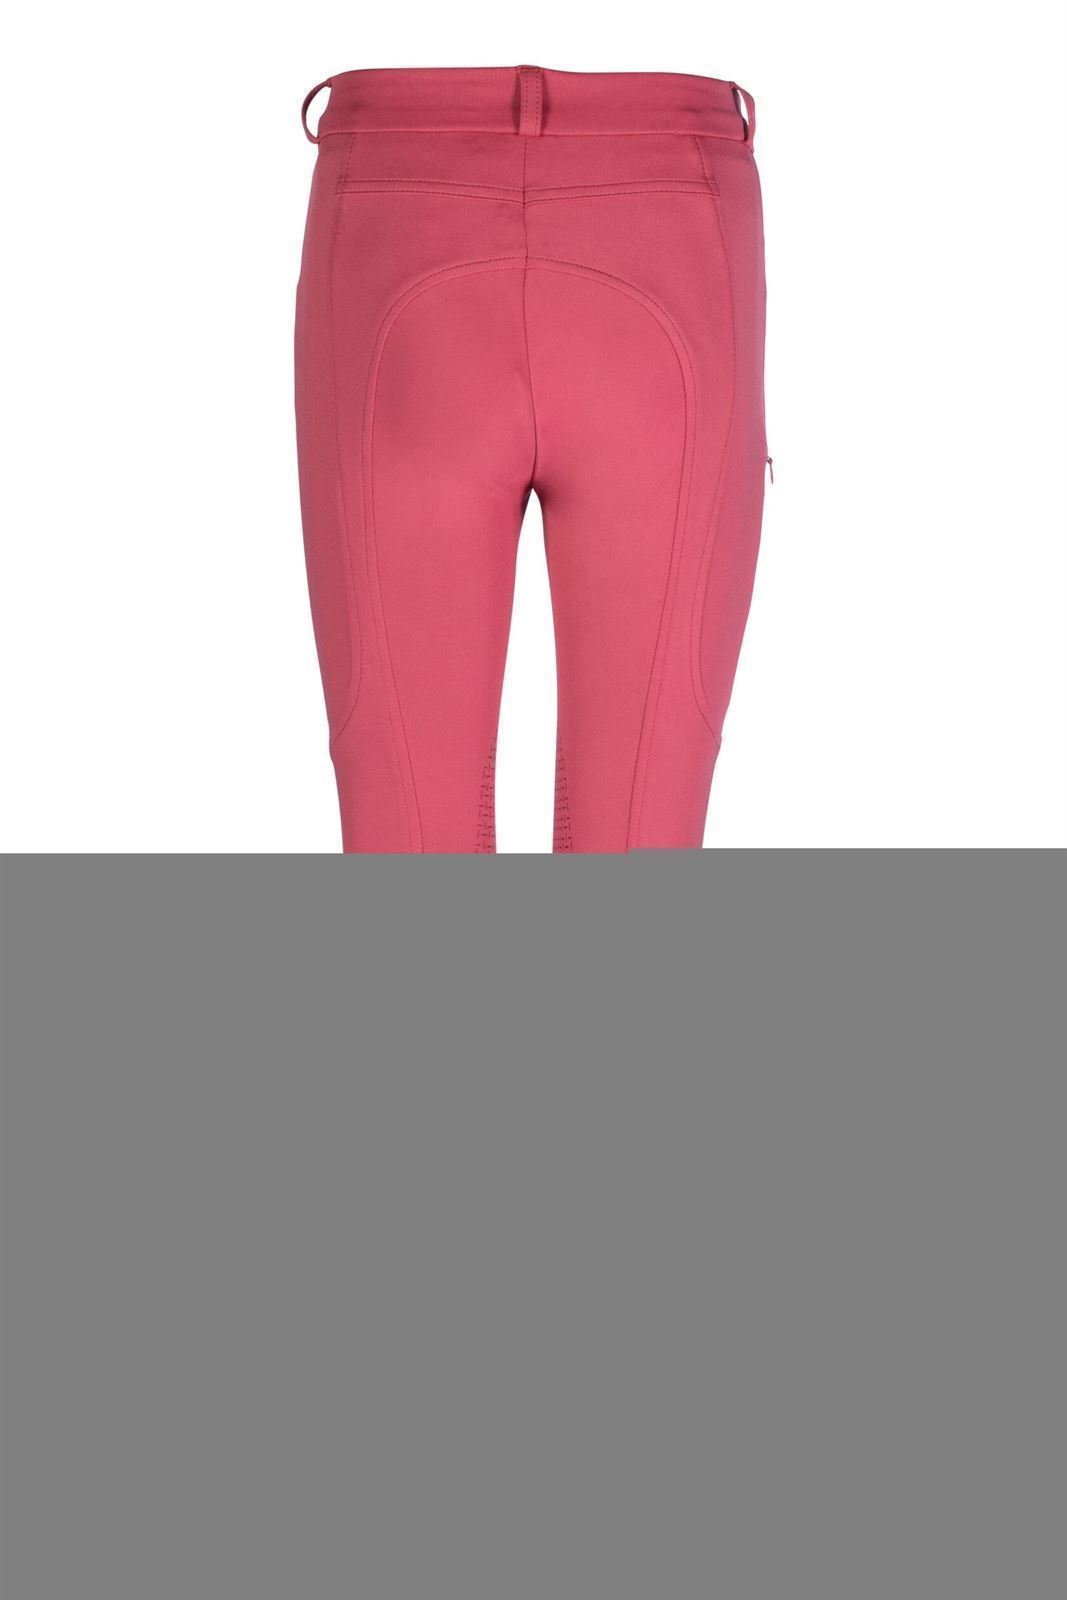 Pantalón unisex HKM Sports Equipment Anni grip rodilla, color frambuesa TALLA 5/6 AÑOS - Imagen 5